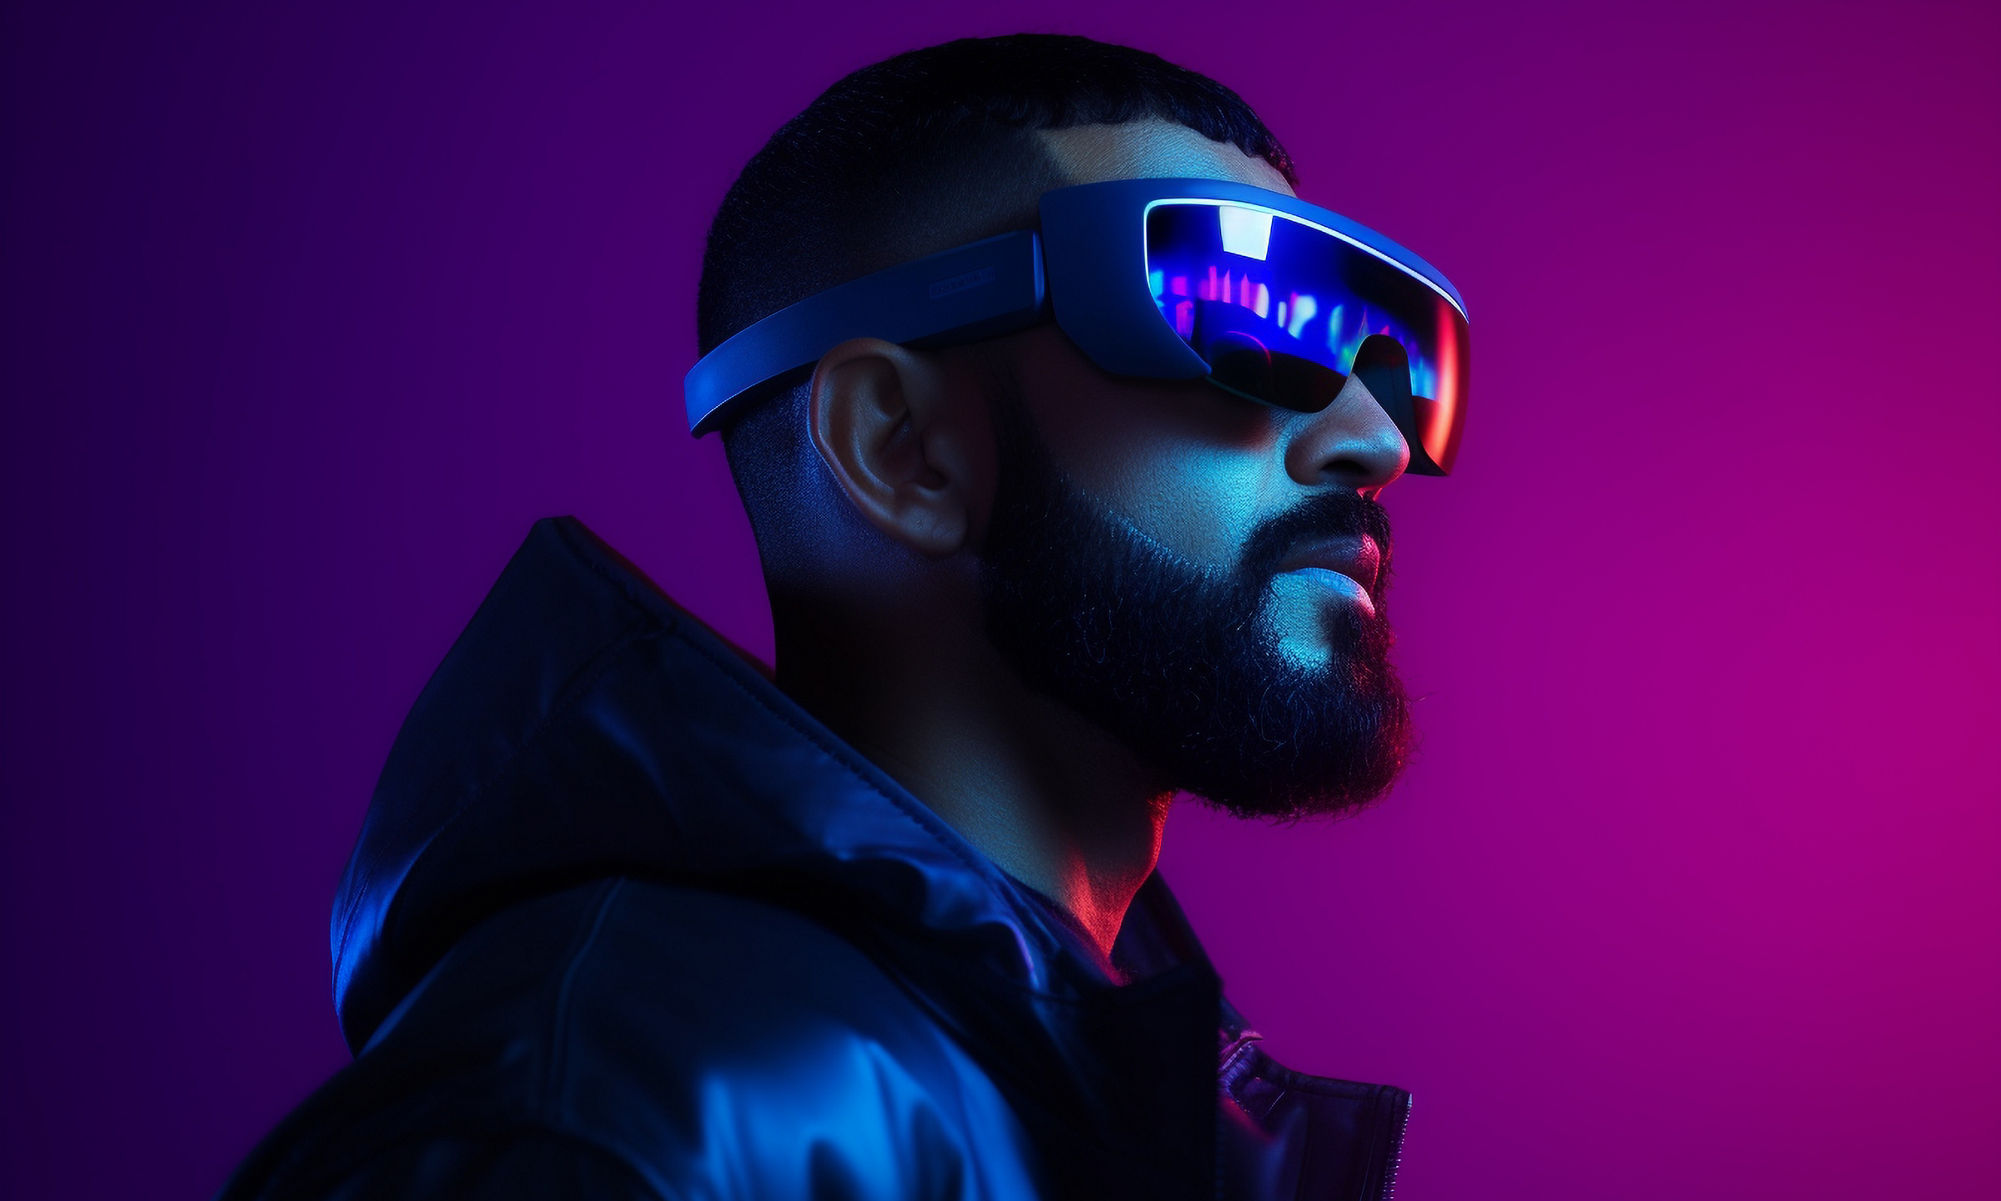 Man with beard wearing VR headset